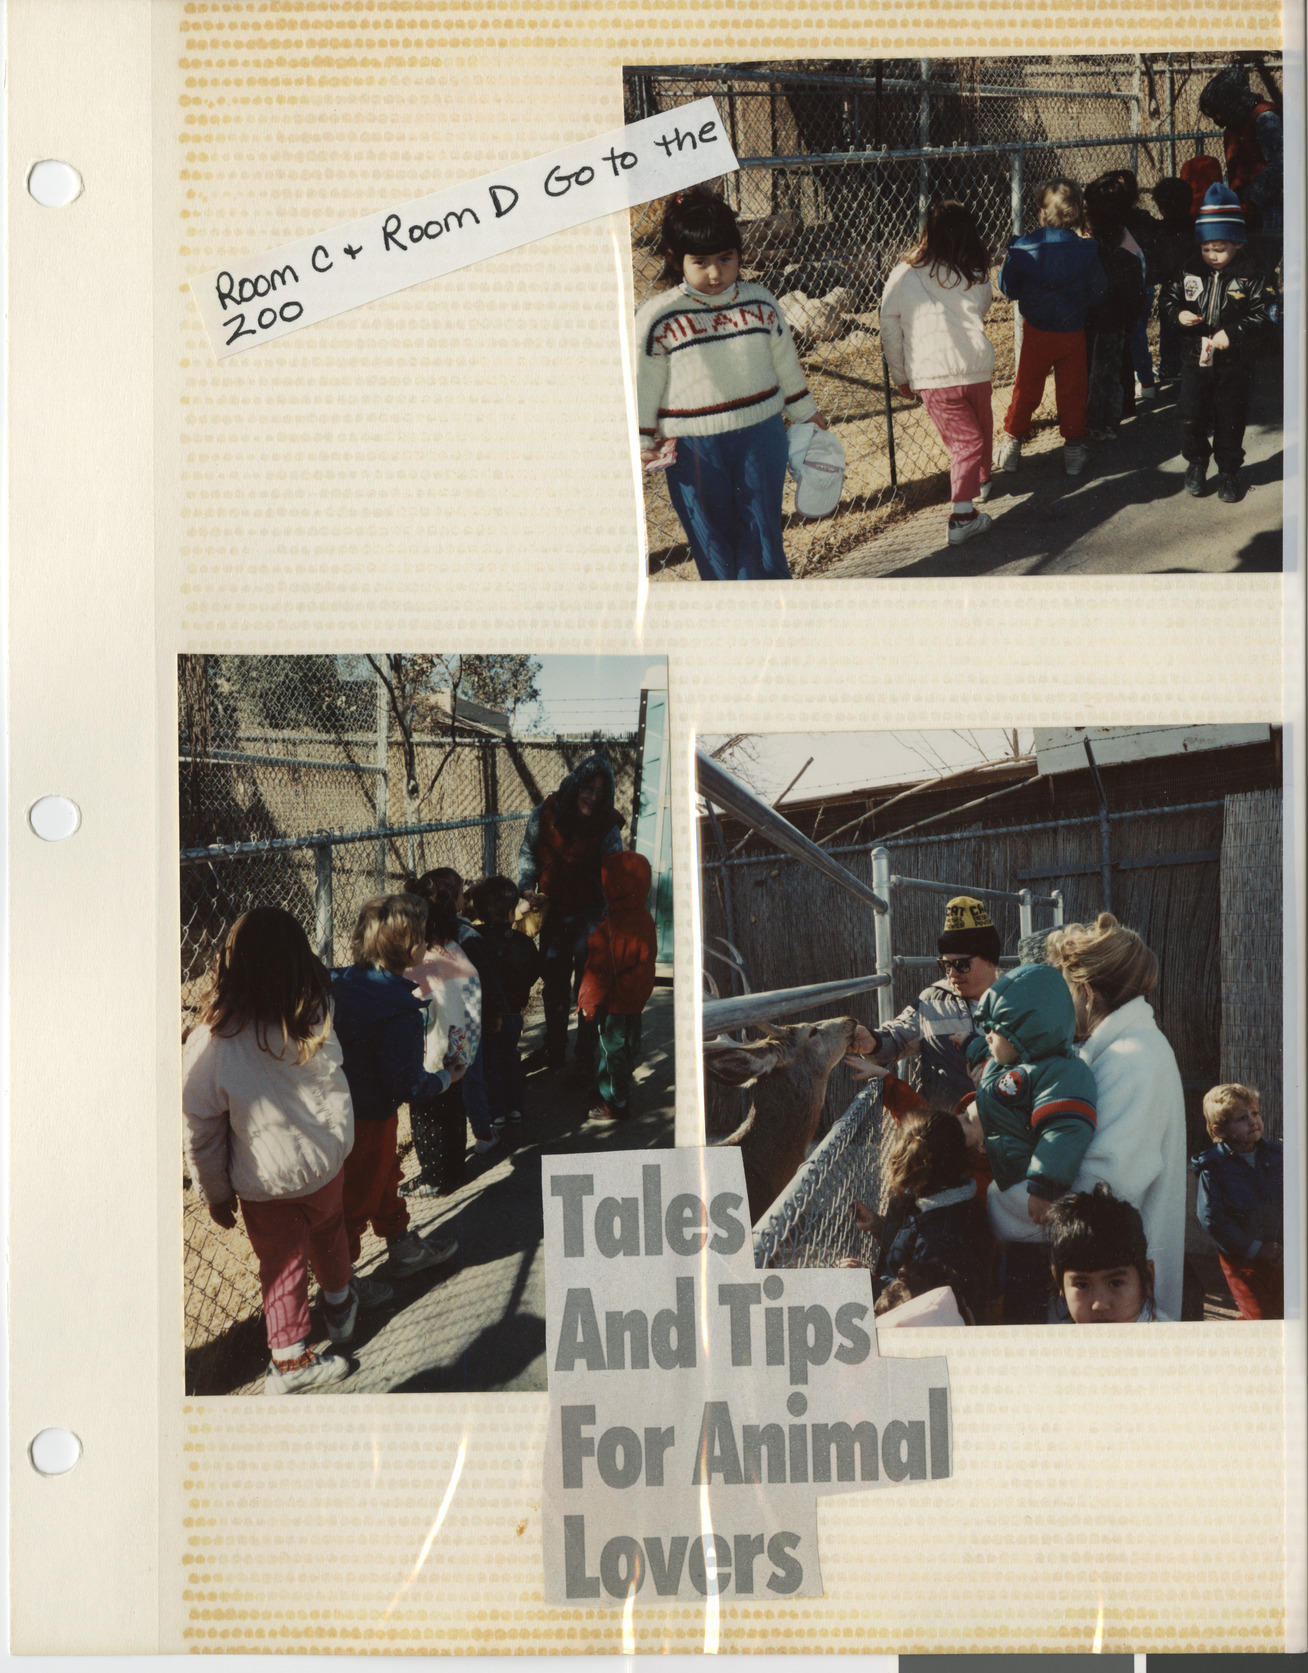 Temple Beth Sholom Preschool photo album, page 19